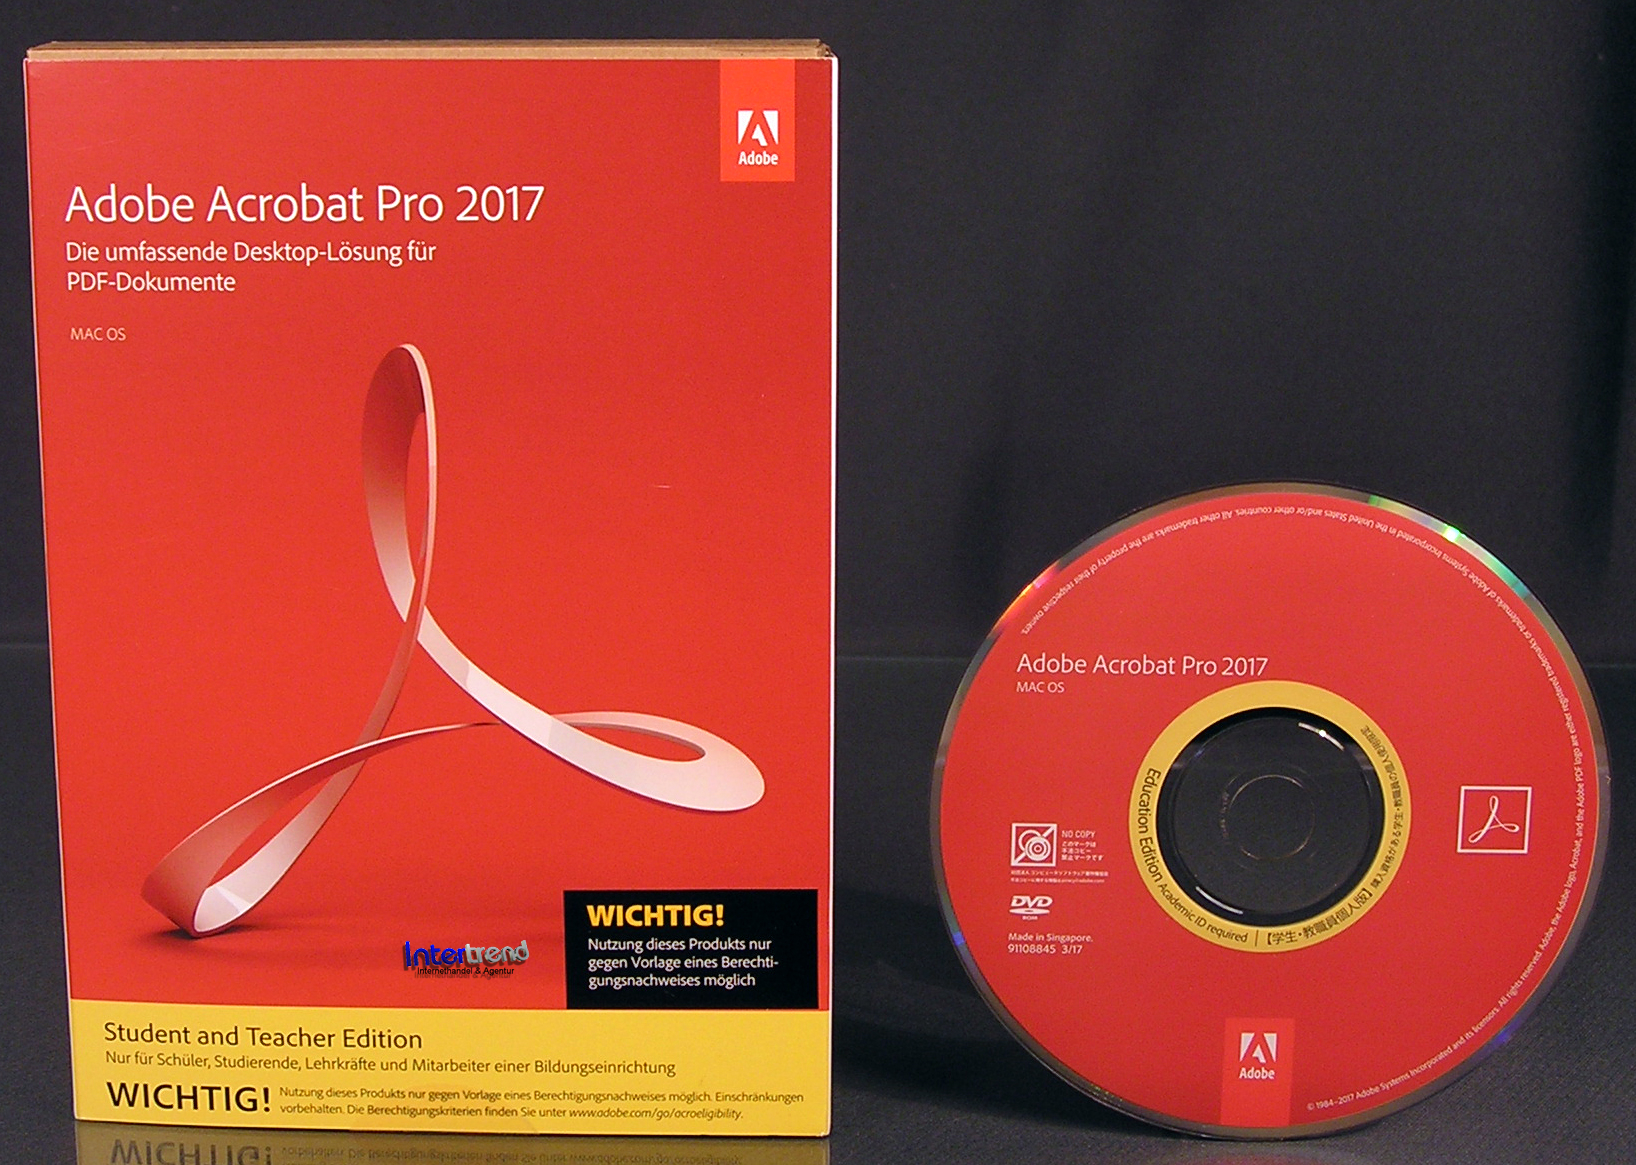 acrobat pro 2017 manual download